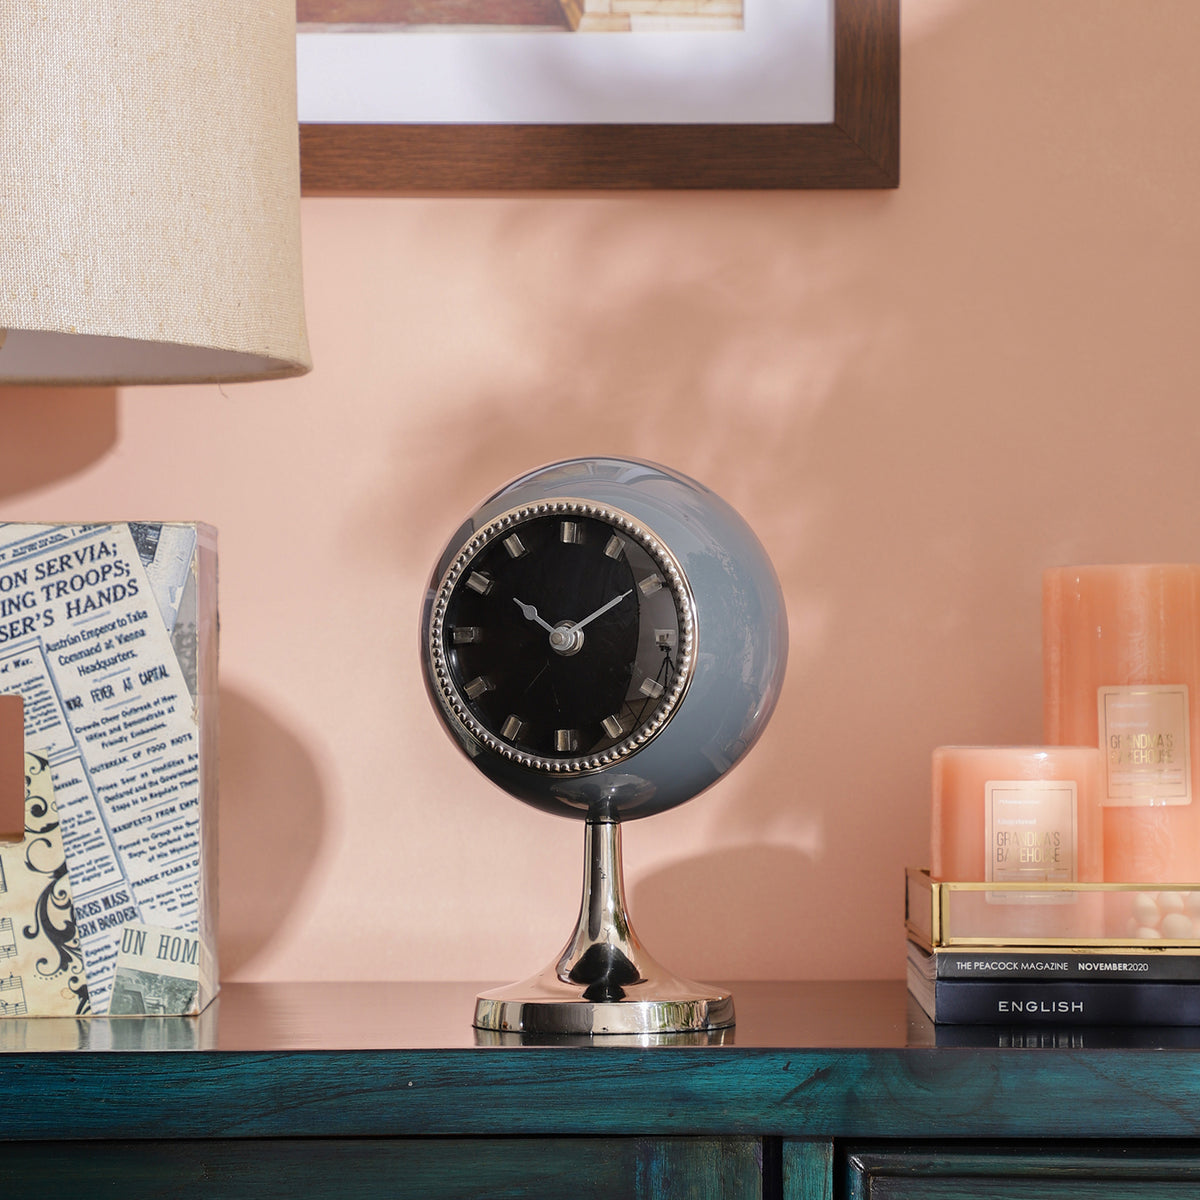 DecorTwist Brings Circular Globe Table Clock showpiece